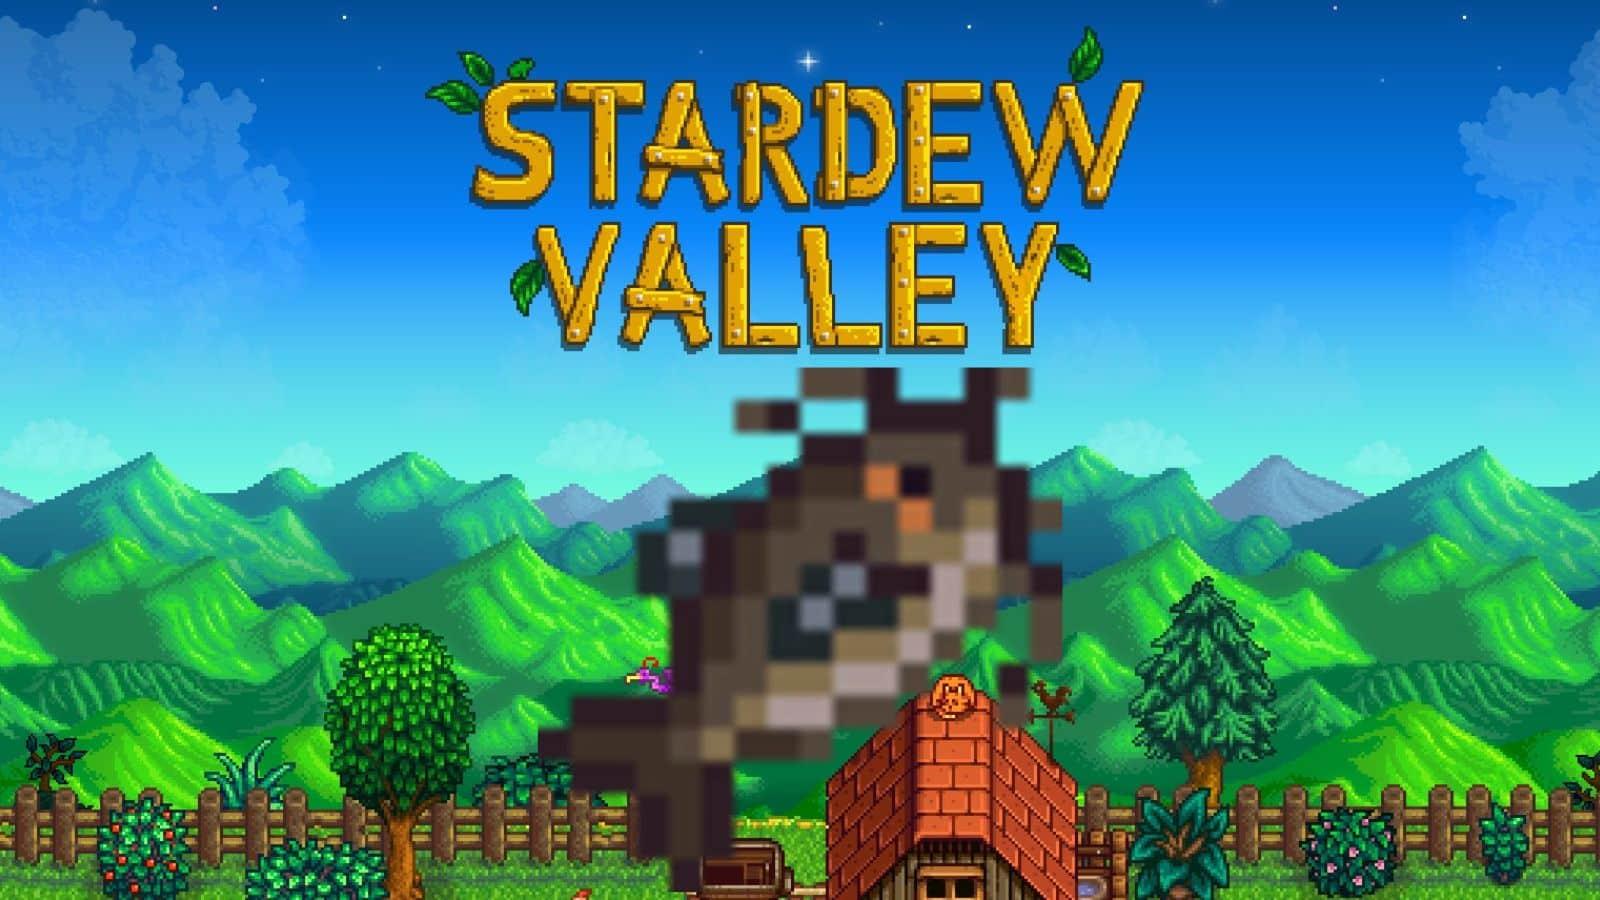 Stardew Valley background and Catfish